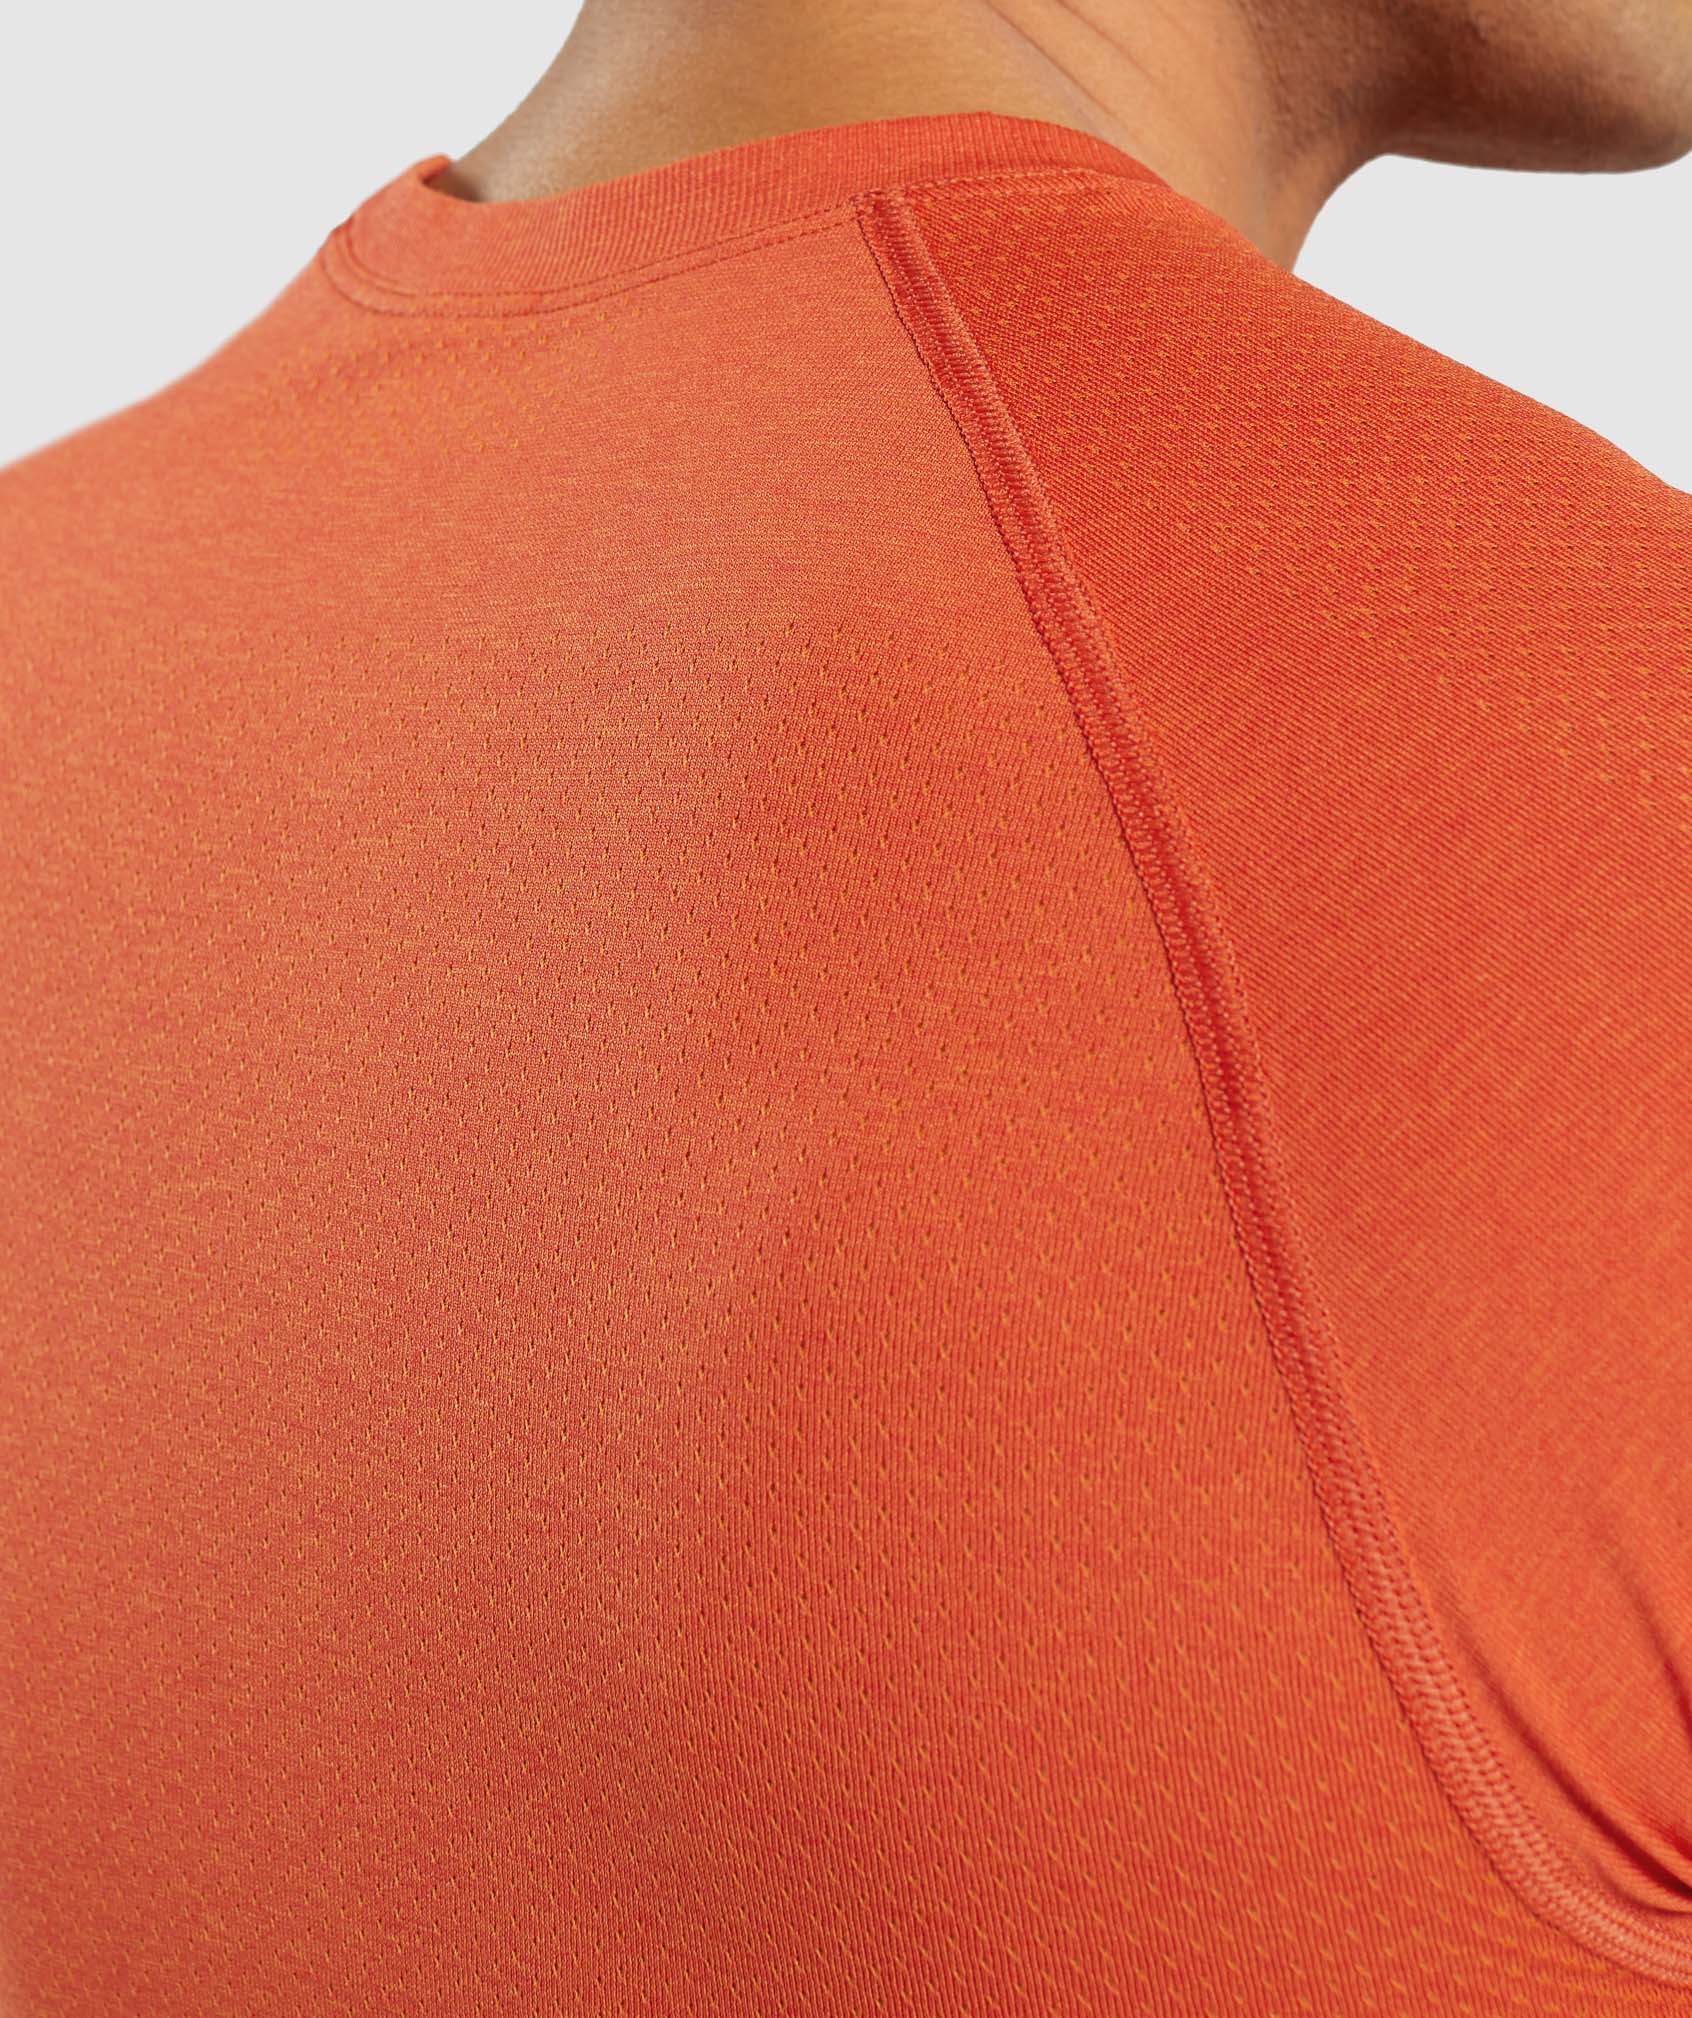 Vital Light Seamless T-Shirt in Papaya Orange Marl - view 6